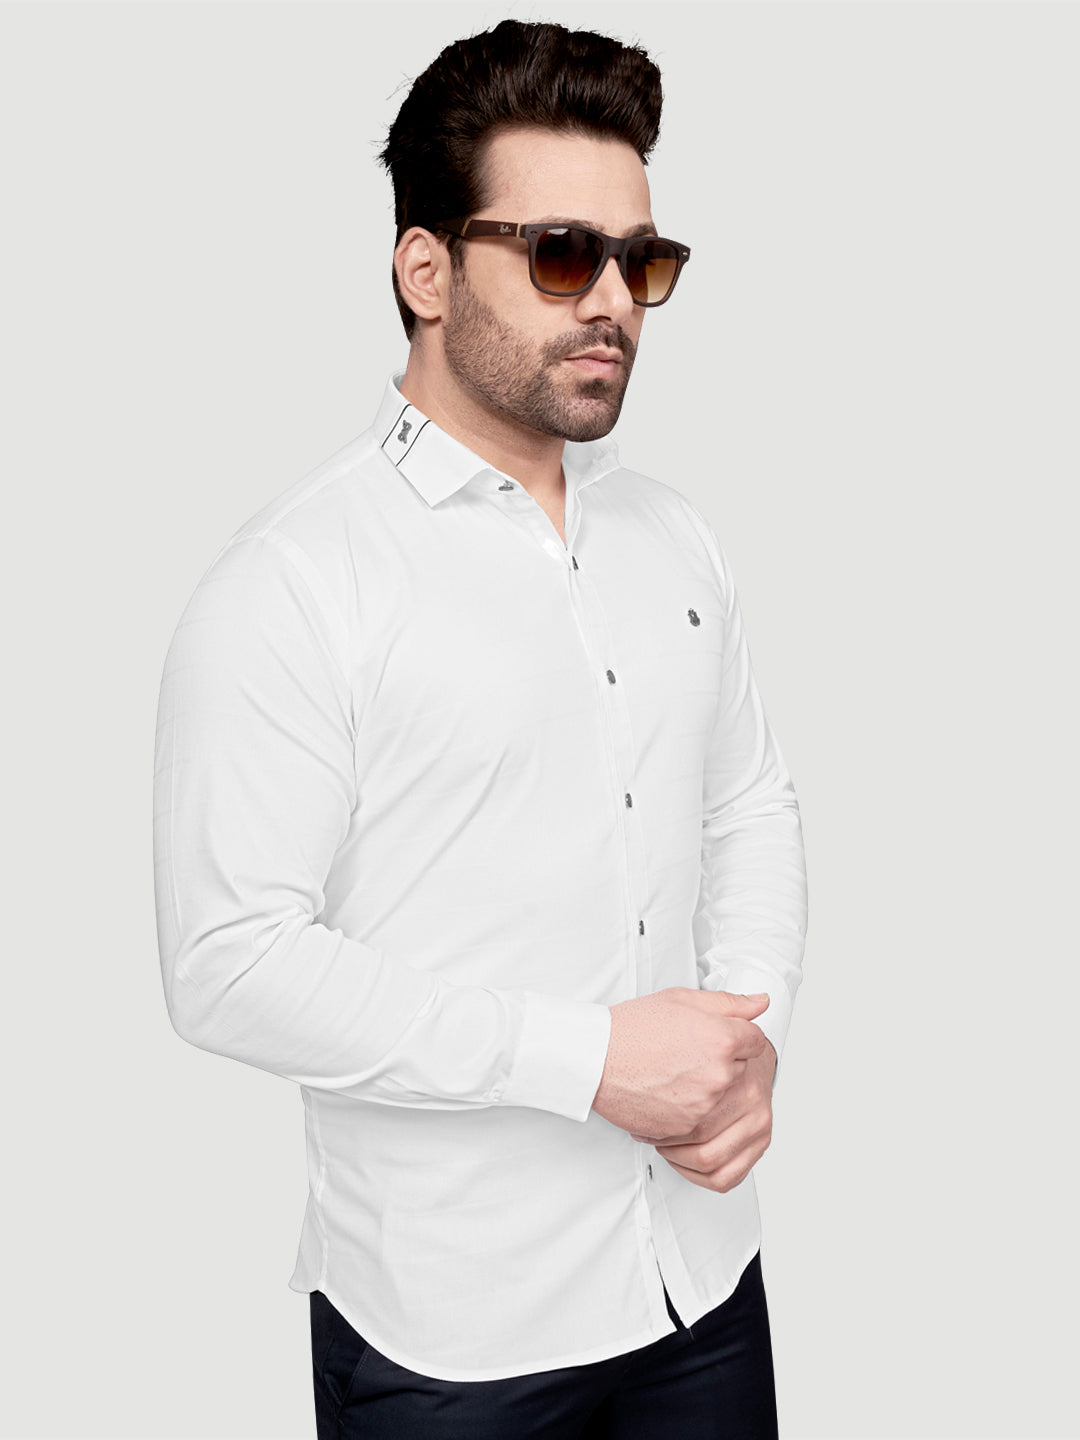 Black and White Men's Designer Shirt with Collar Accessory & Designer Broach White